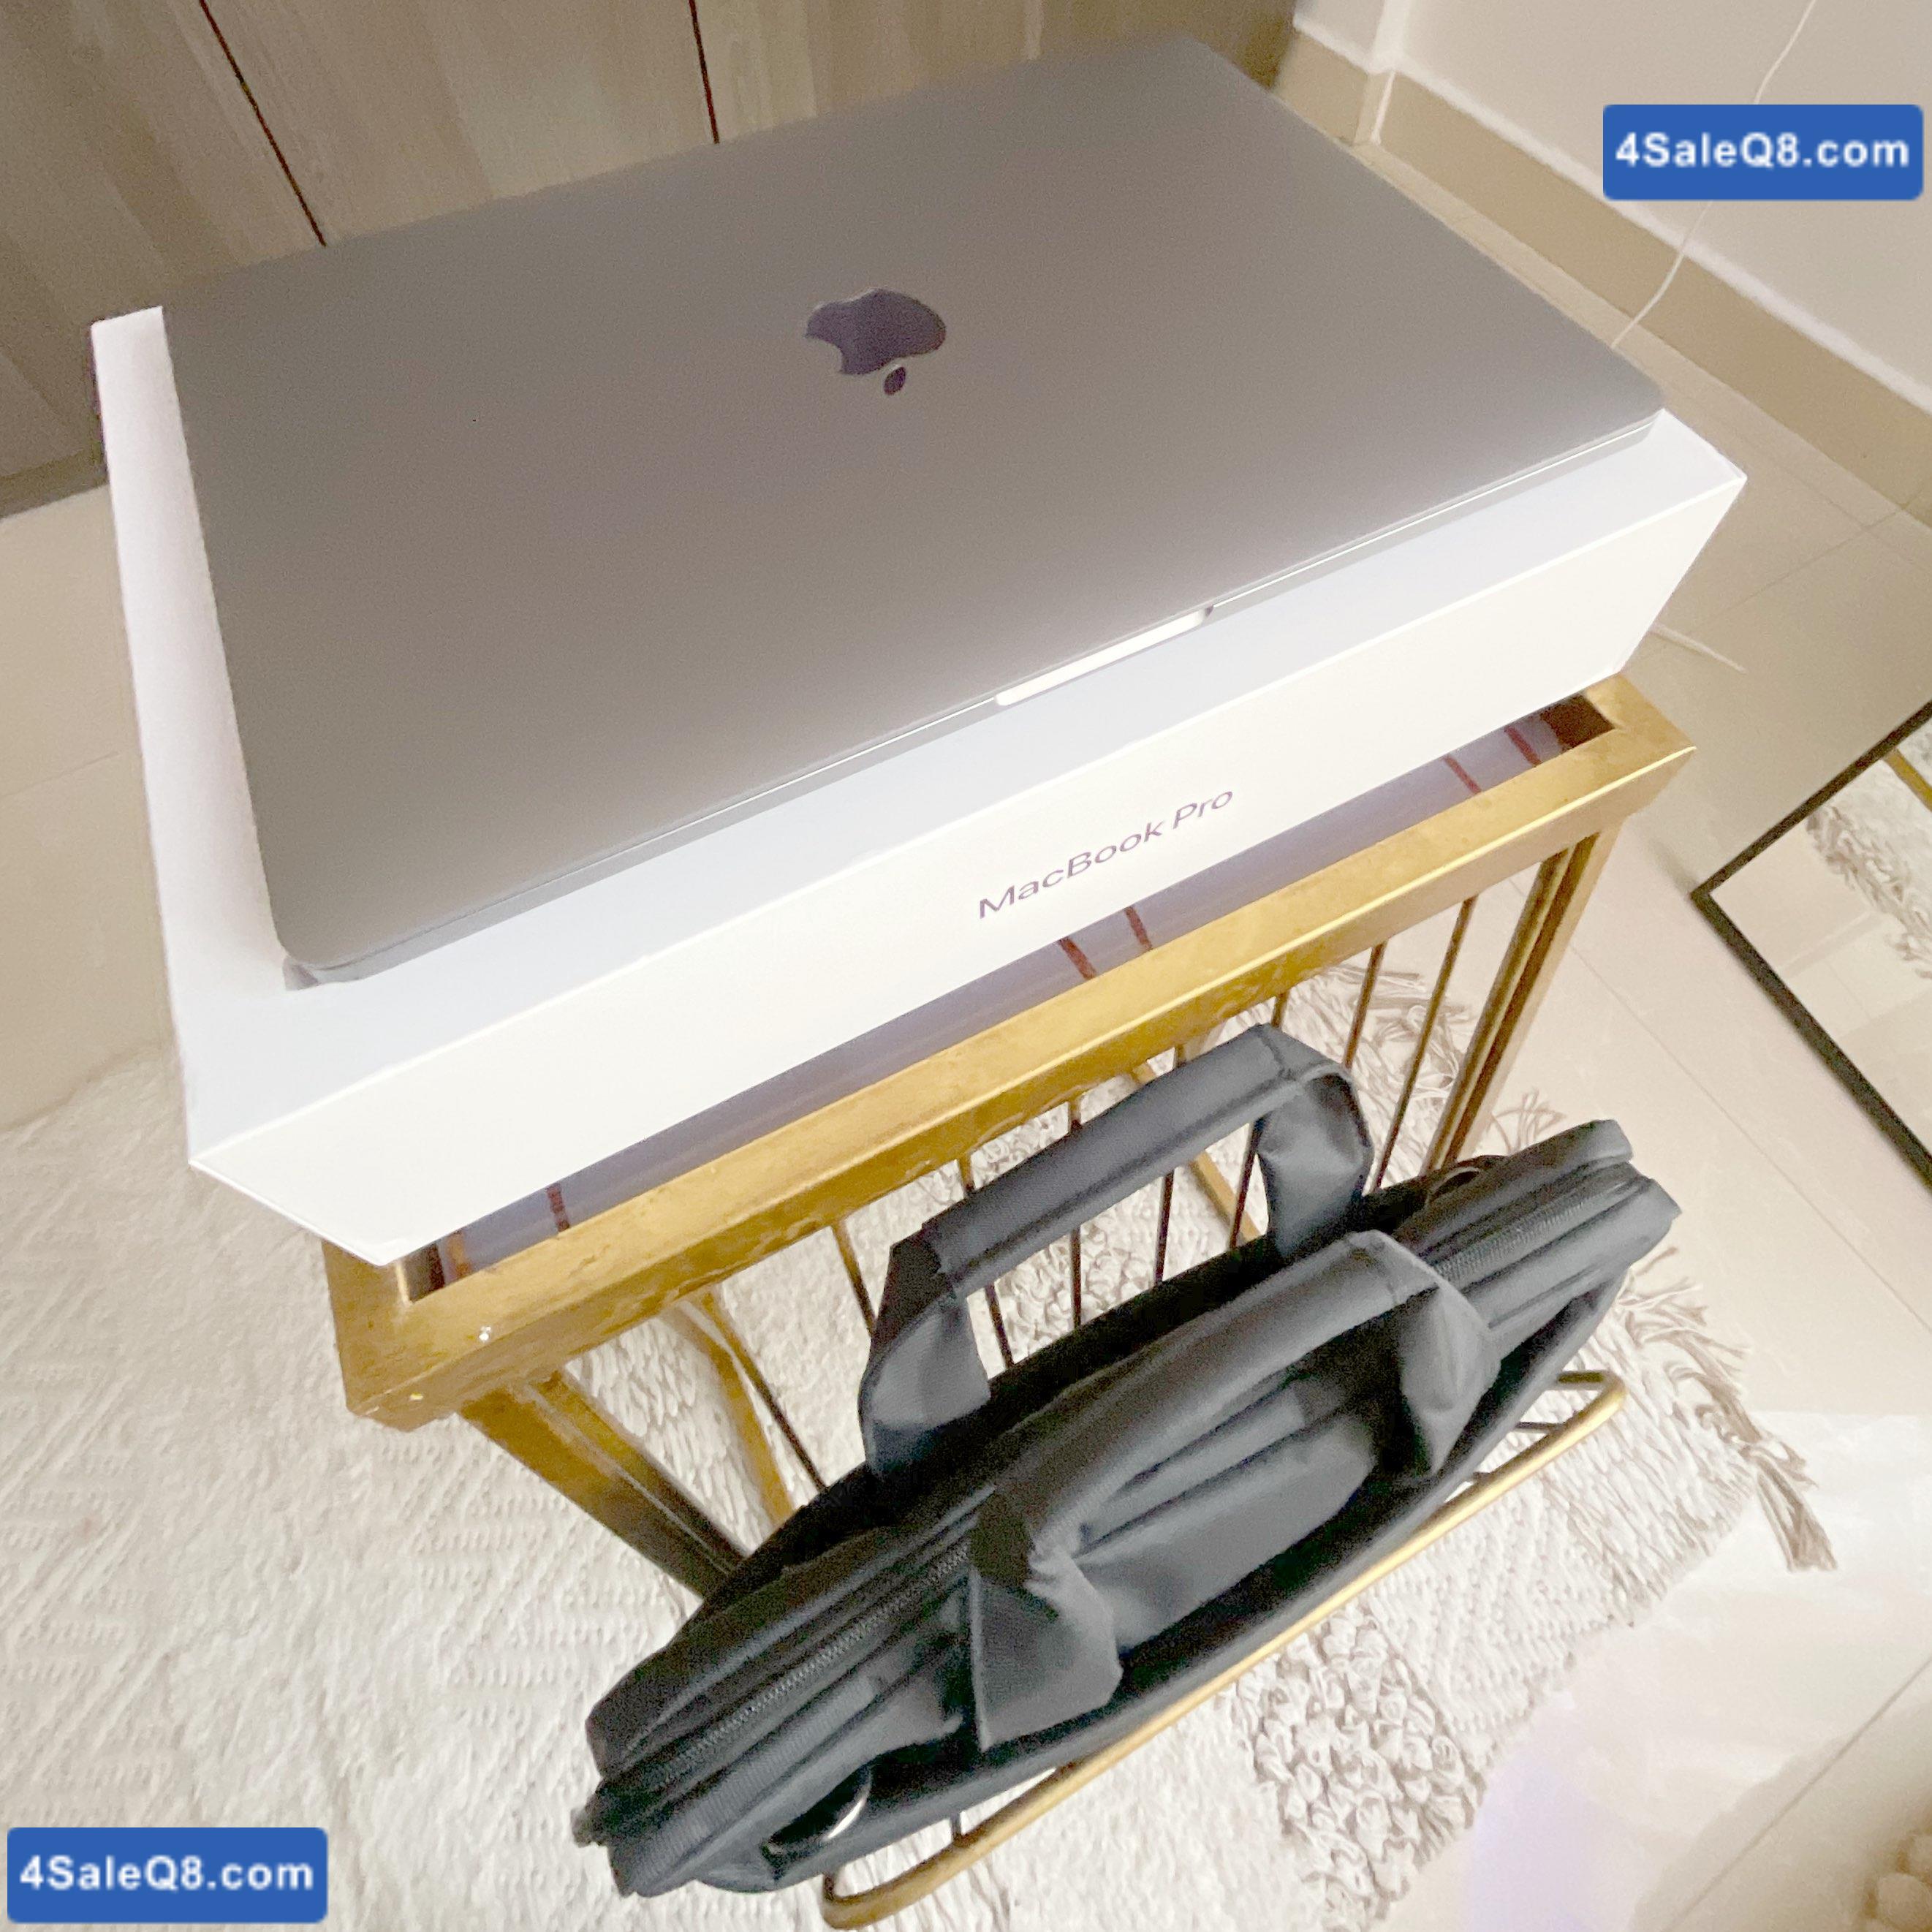 Apple MacBook Pro M1, RAM 8GB, 256GB SSD 13.3-inch (2020) - Space Grey